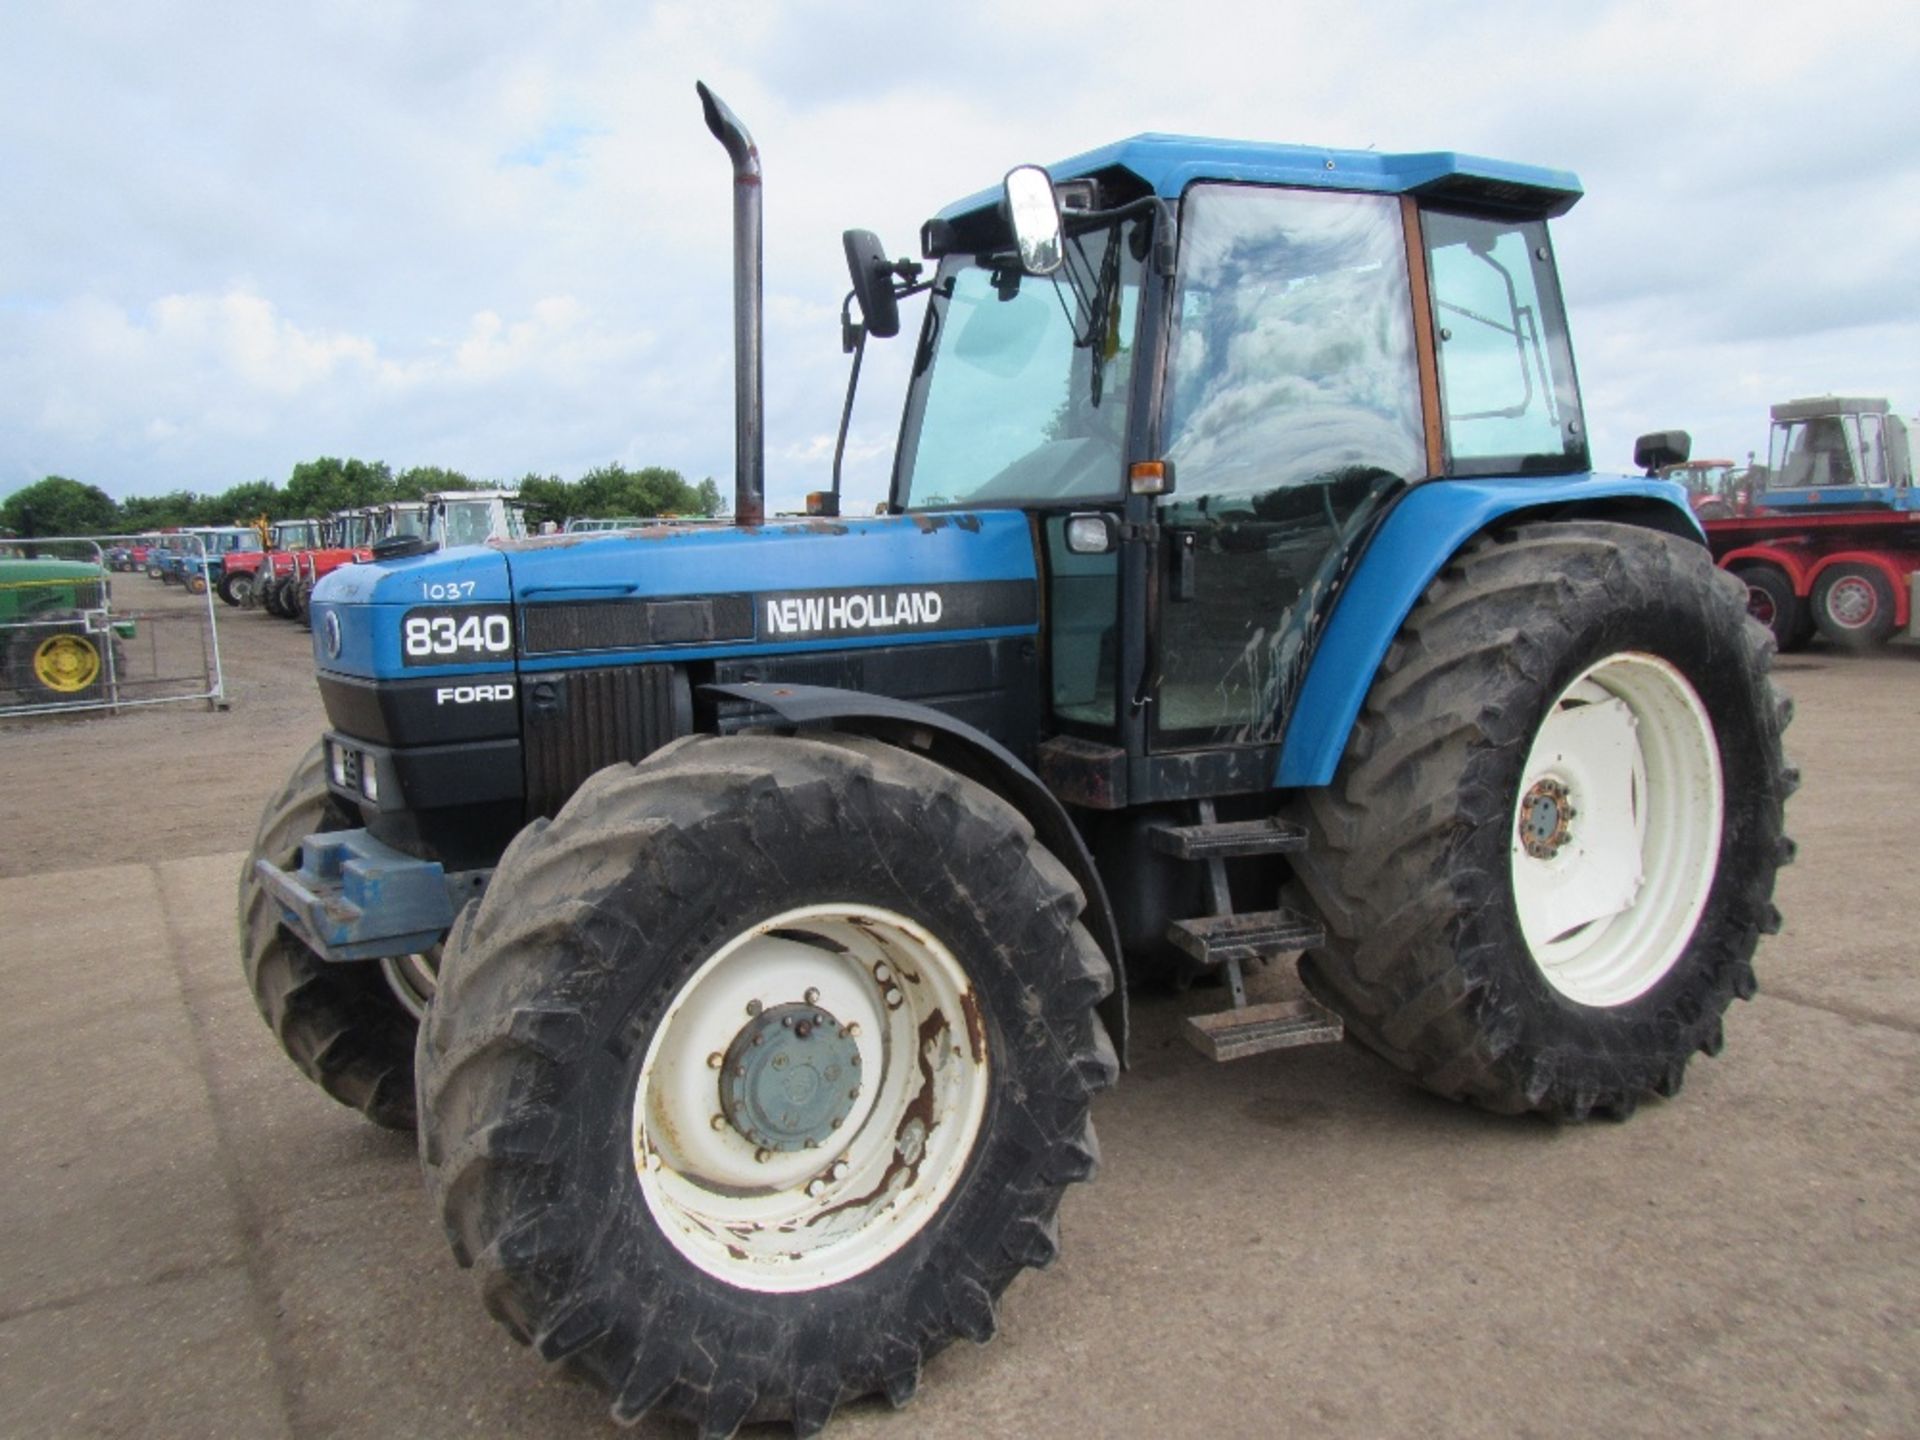 New Holland 8340 SLE 4wd Tractor. Reg. No. N243 SCN Ser. No. 025324B